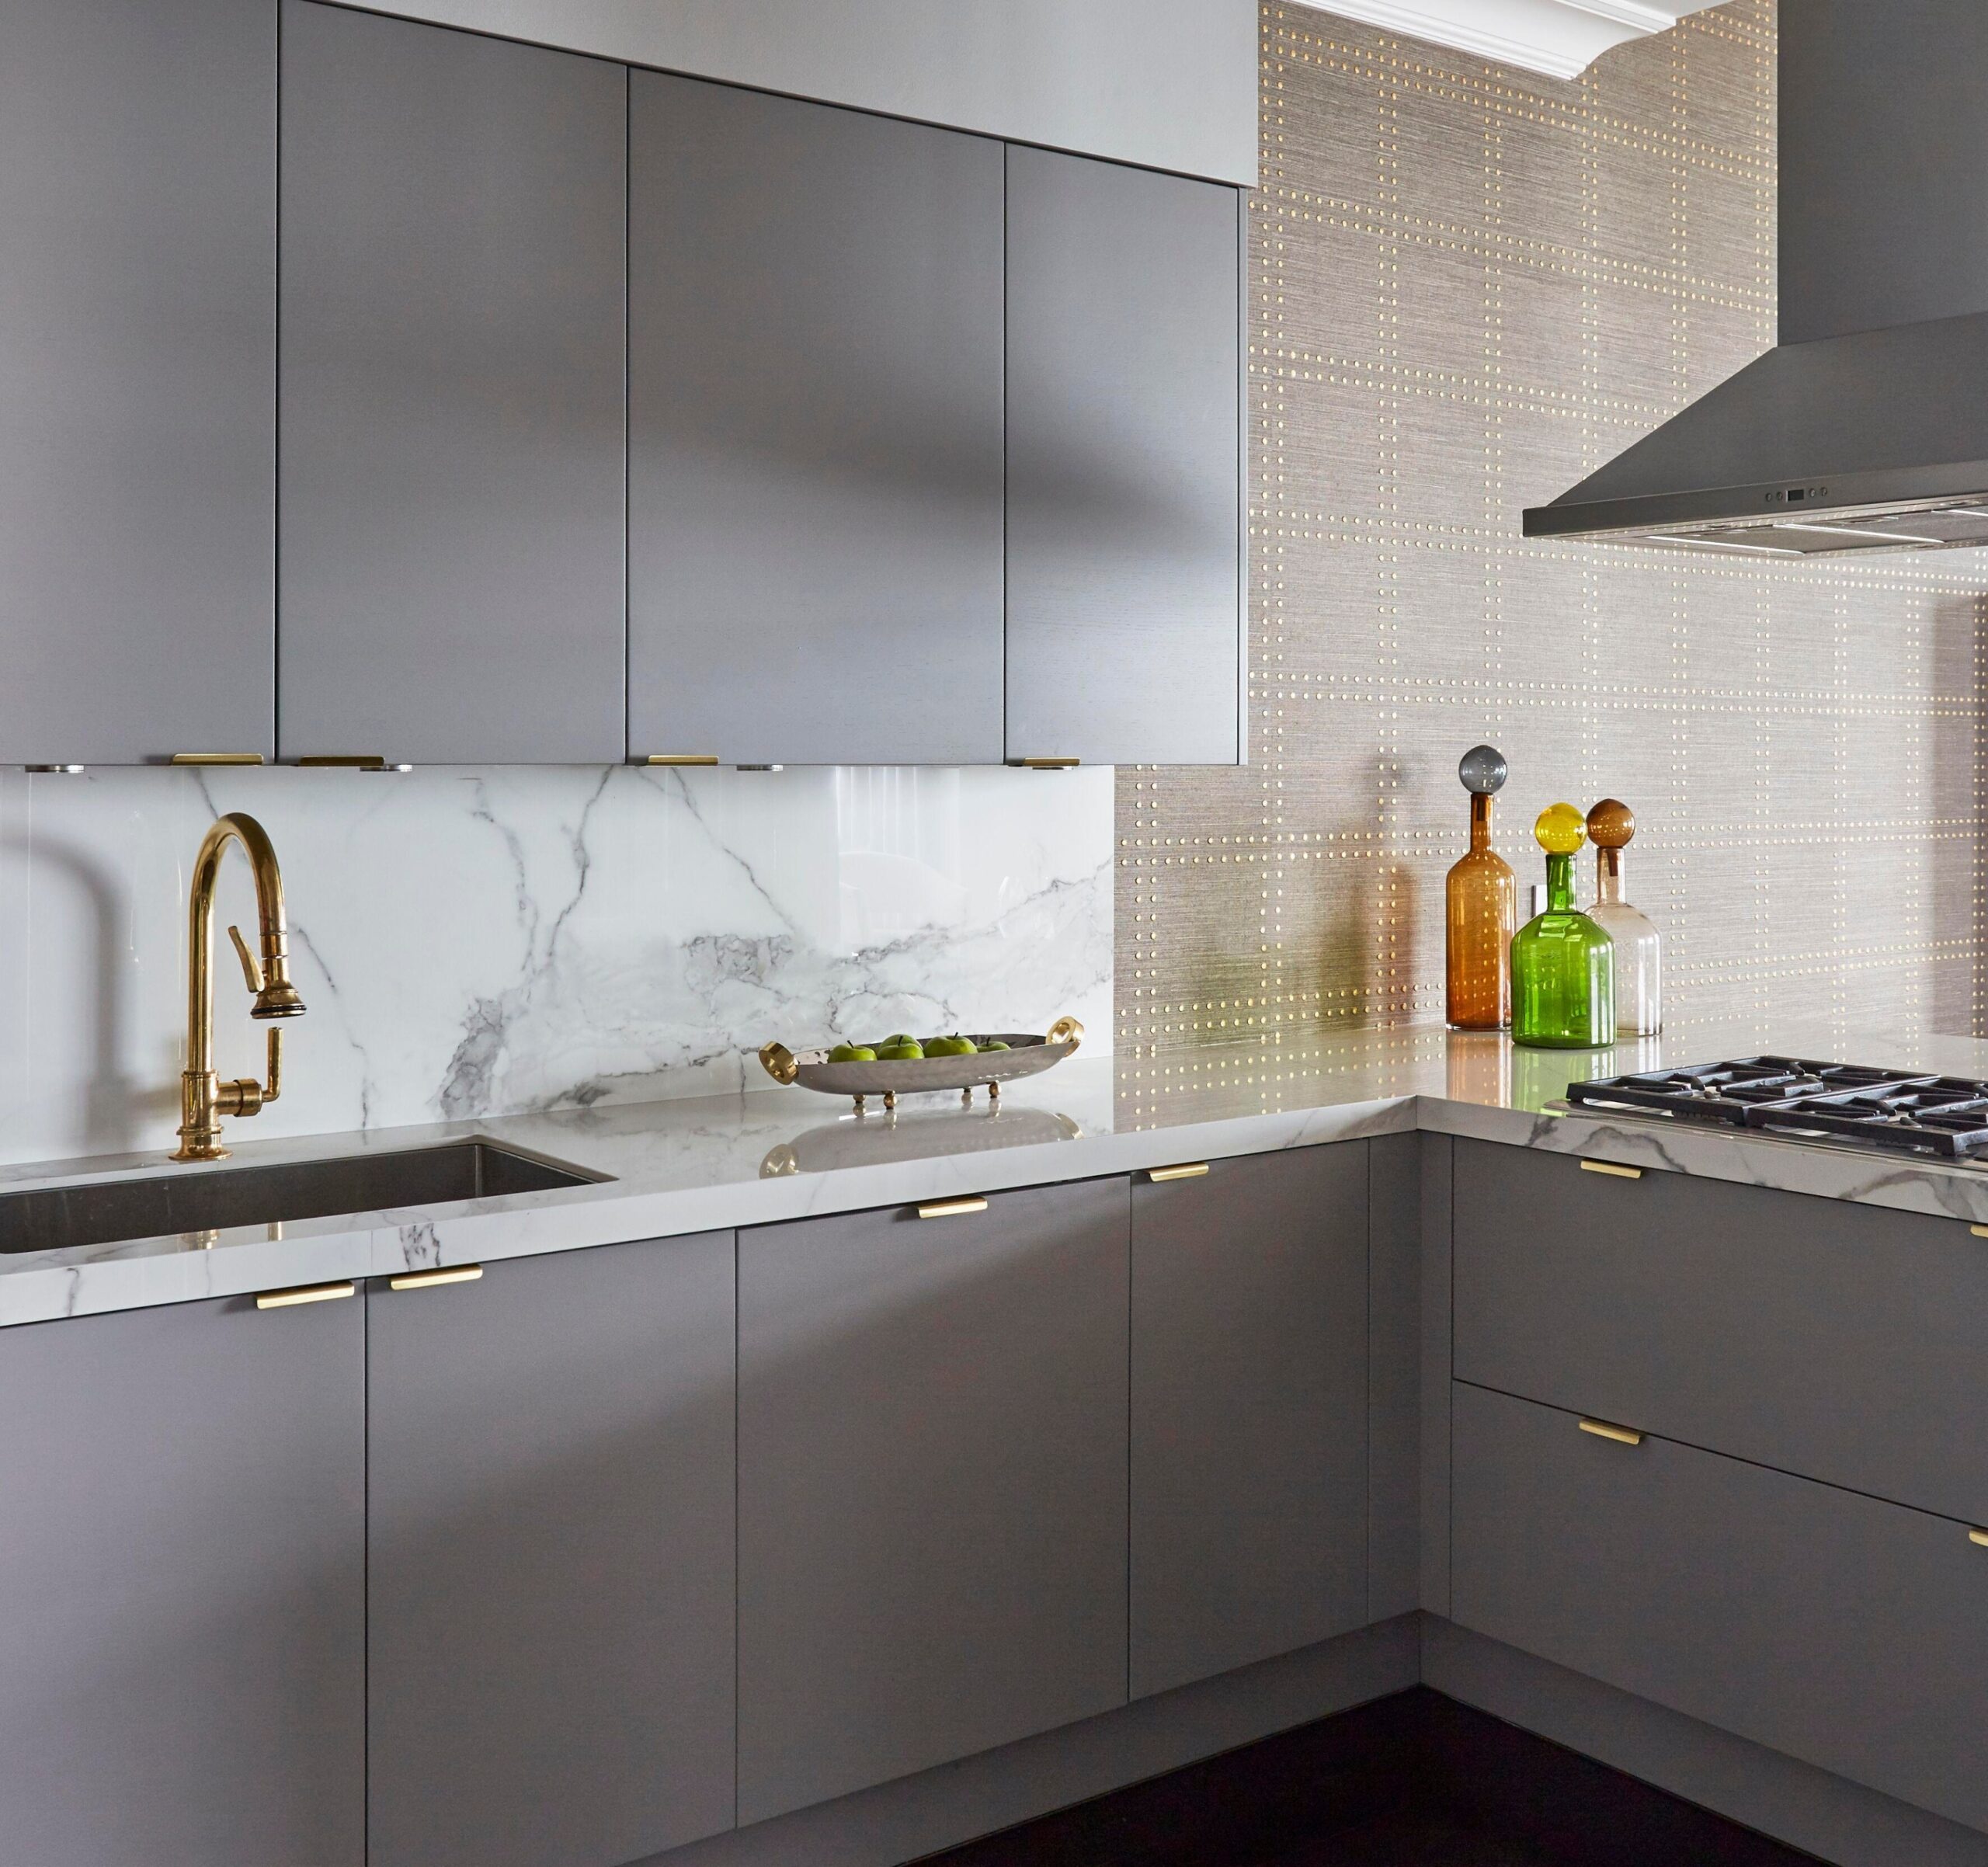 5 Sophisticated Gray Kitchen Ideas - Chic Gray Kitchens - grey kitchen decor ideas